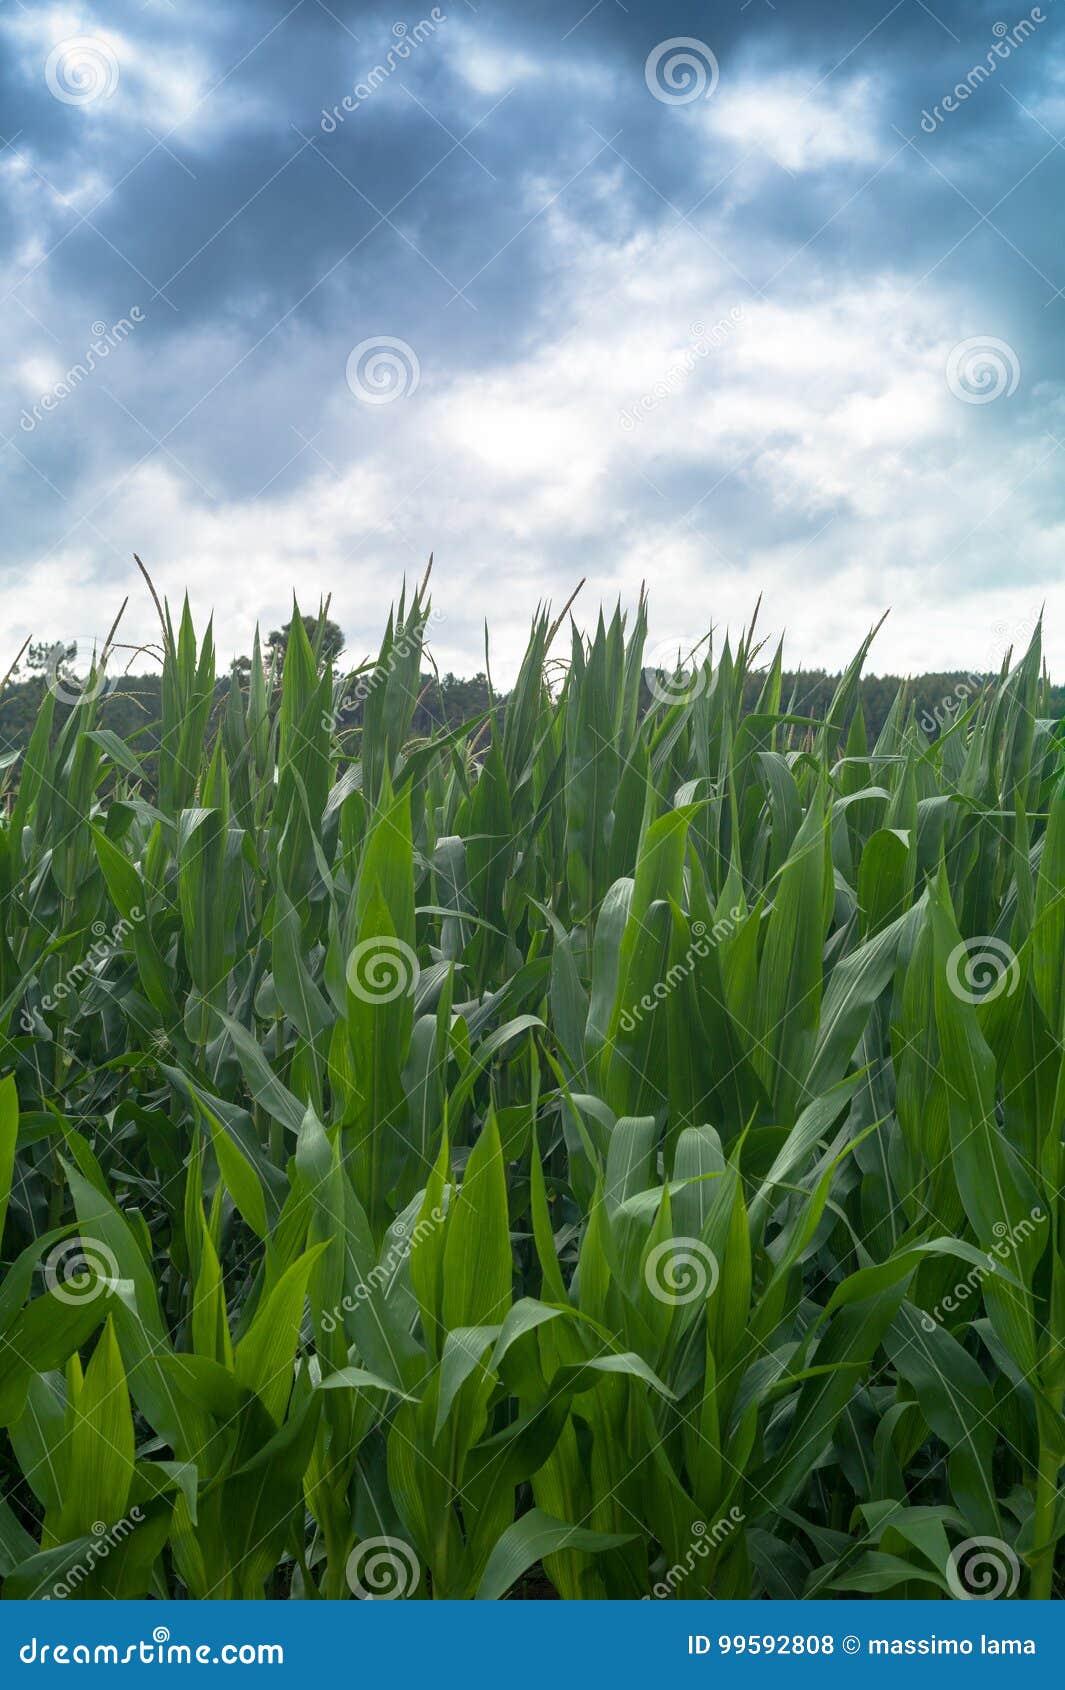 fields of maize